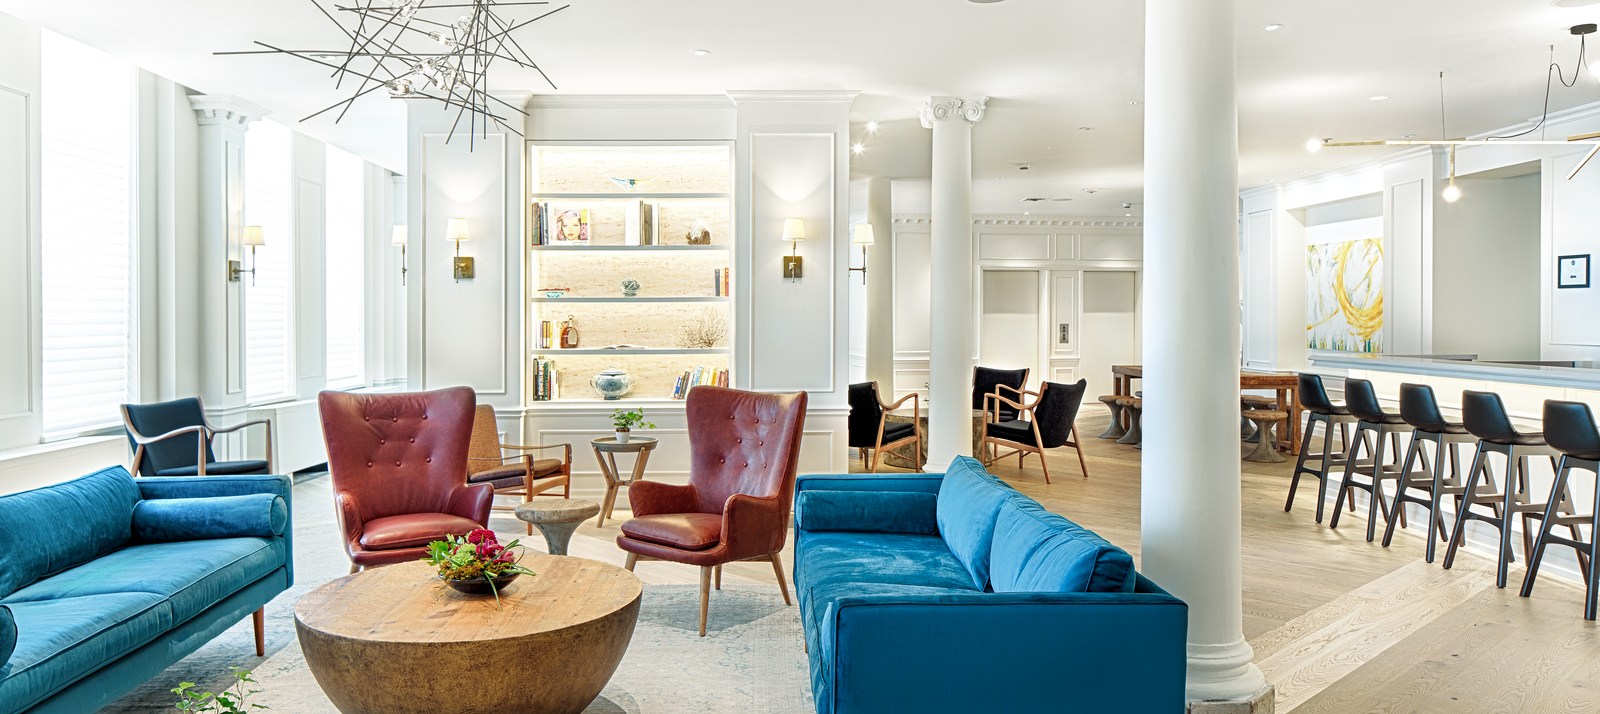 Chic, modern hotel lobby with bright blue sofas